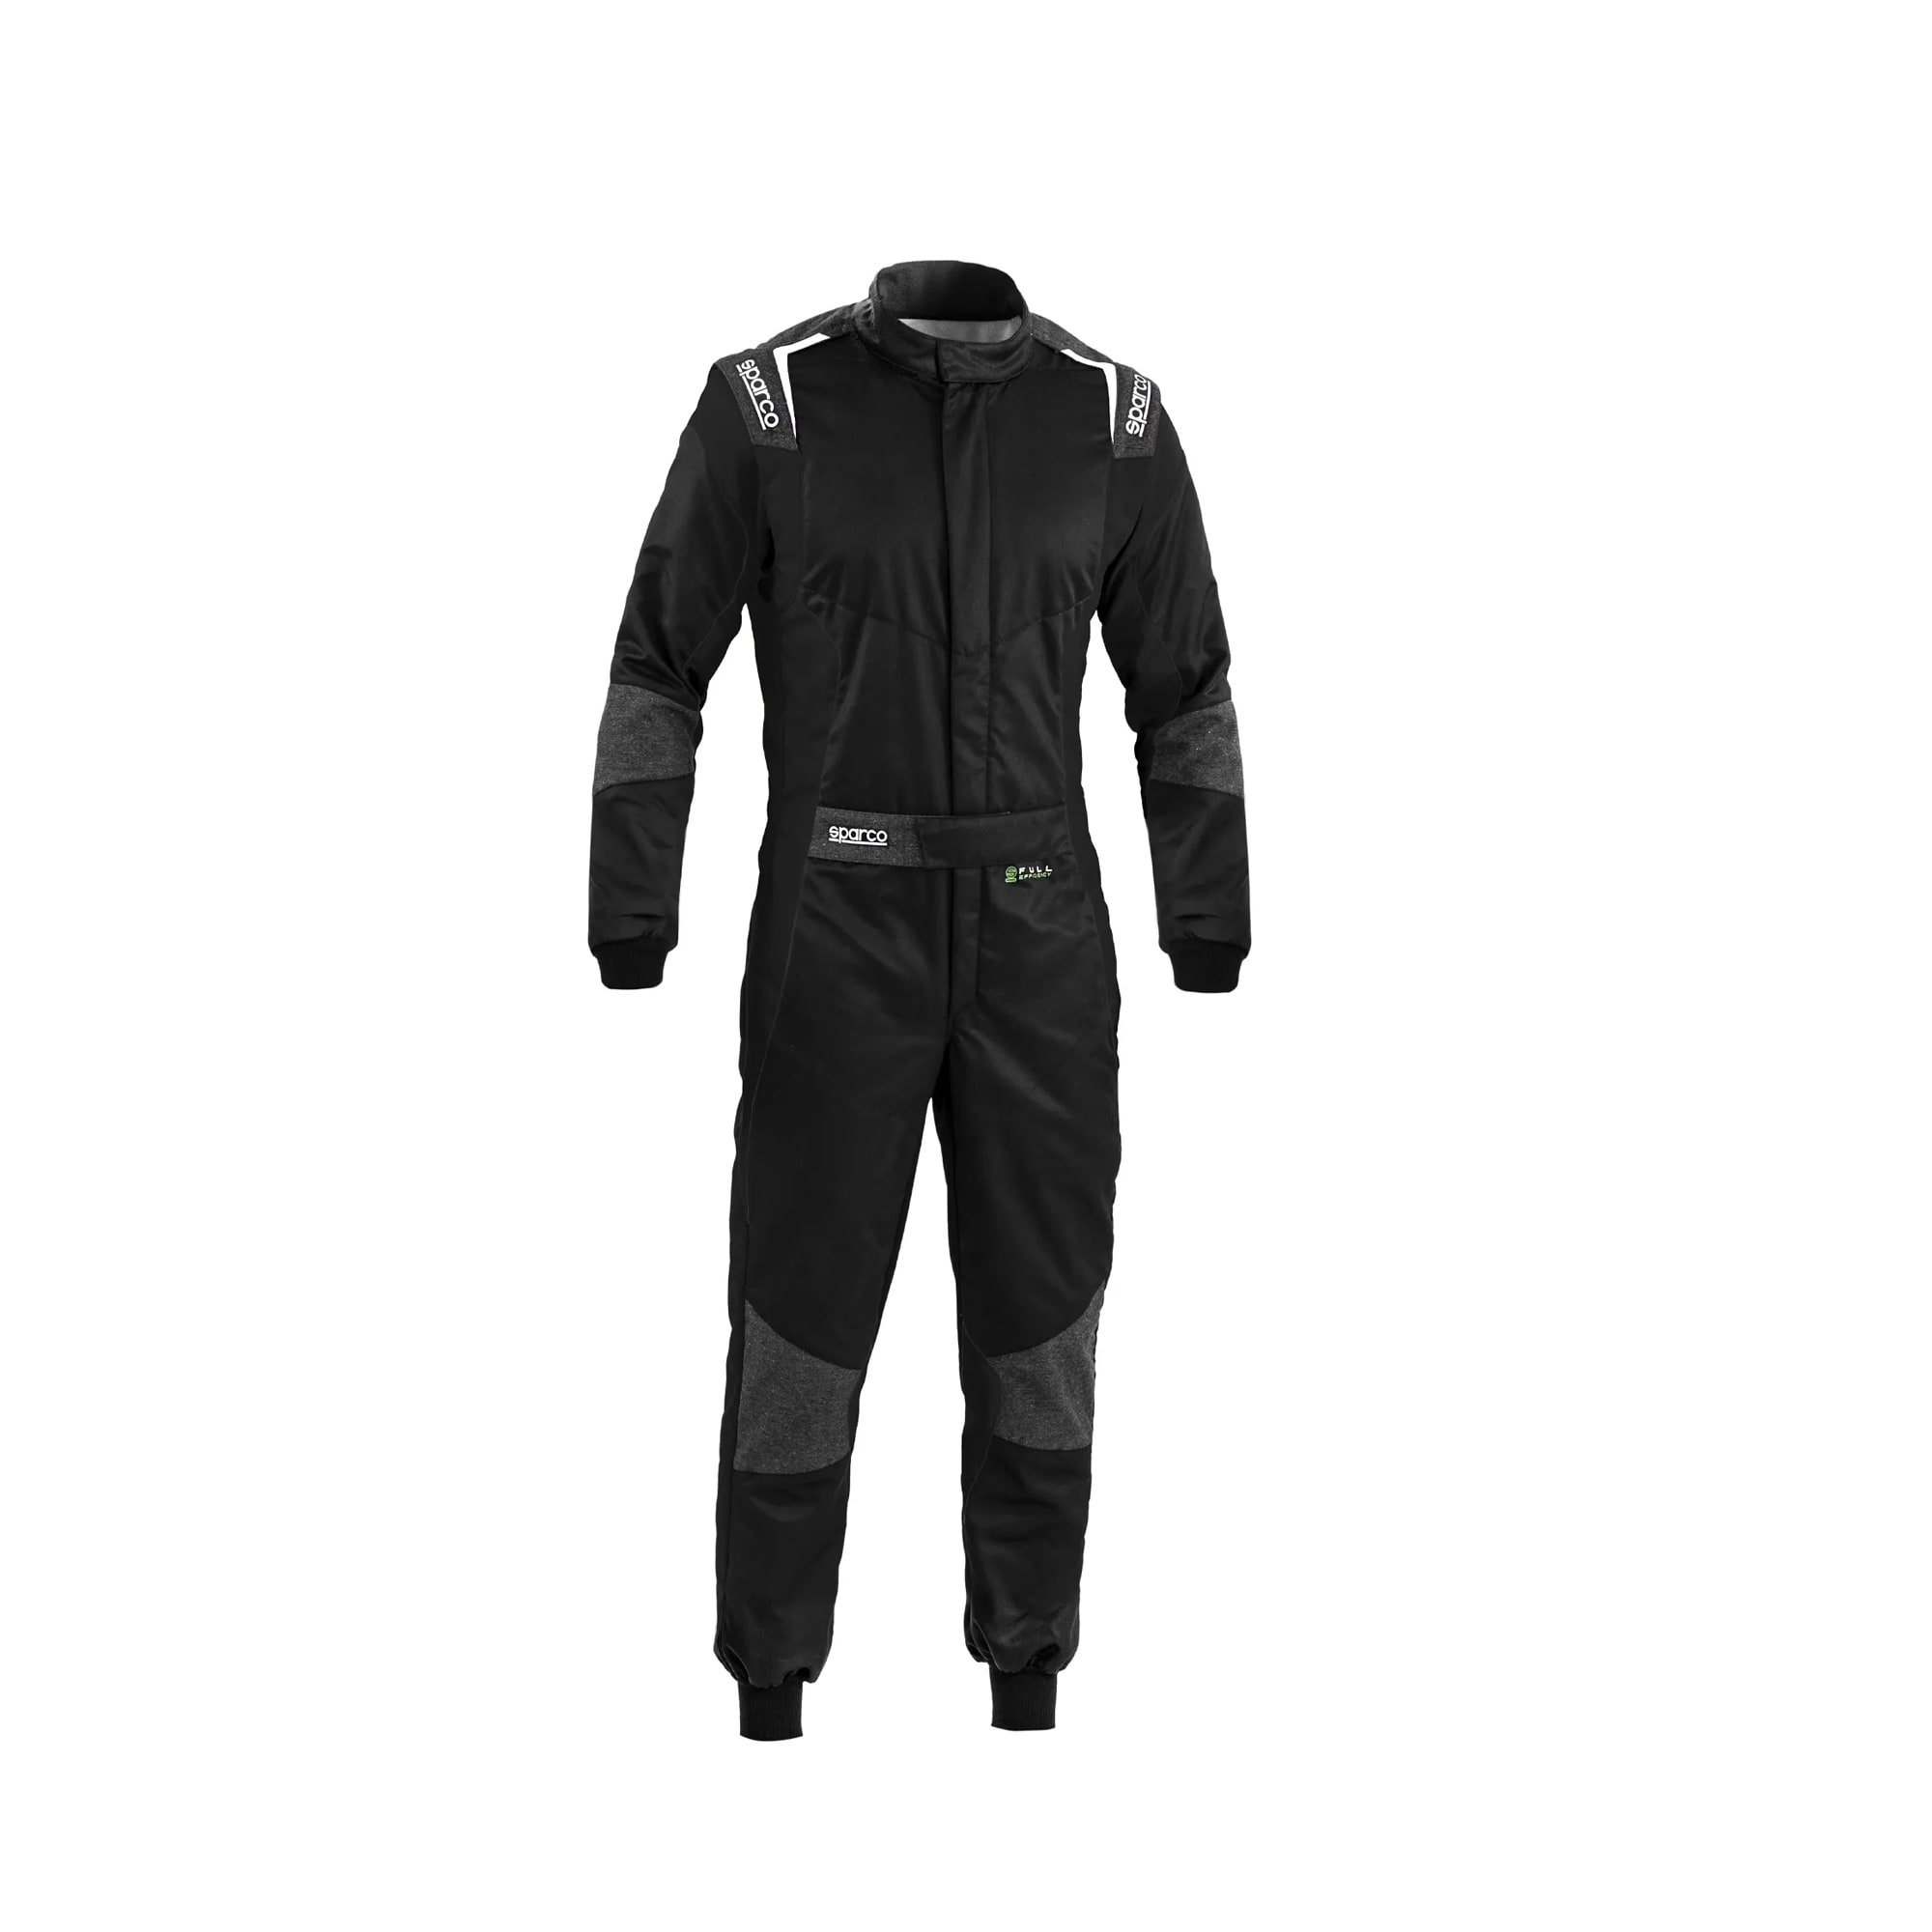 Racing Suit Sparco Futura R579 Sort